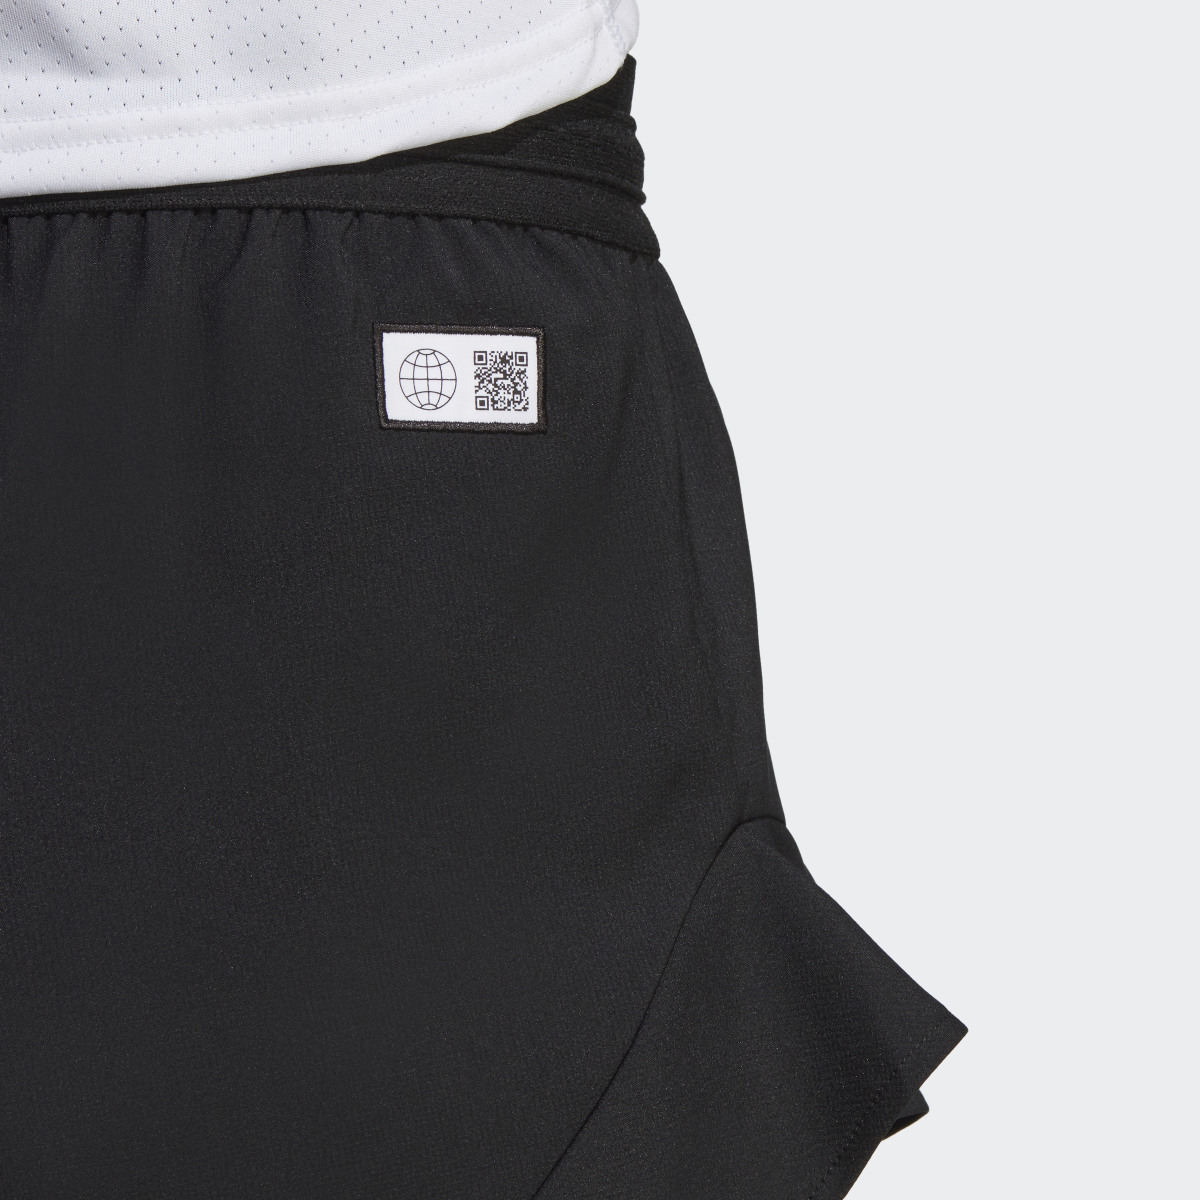 Adidas Made to be Remade Running Shorts. 6